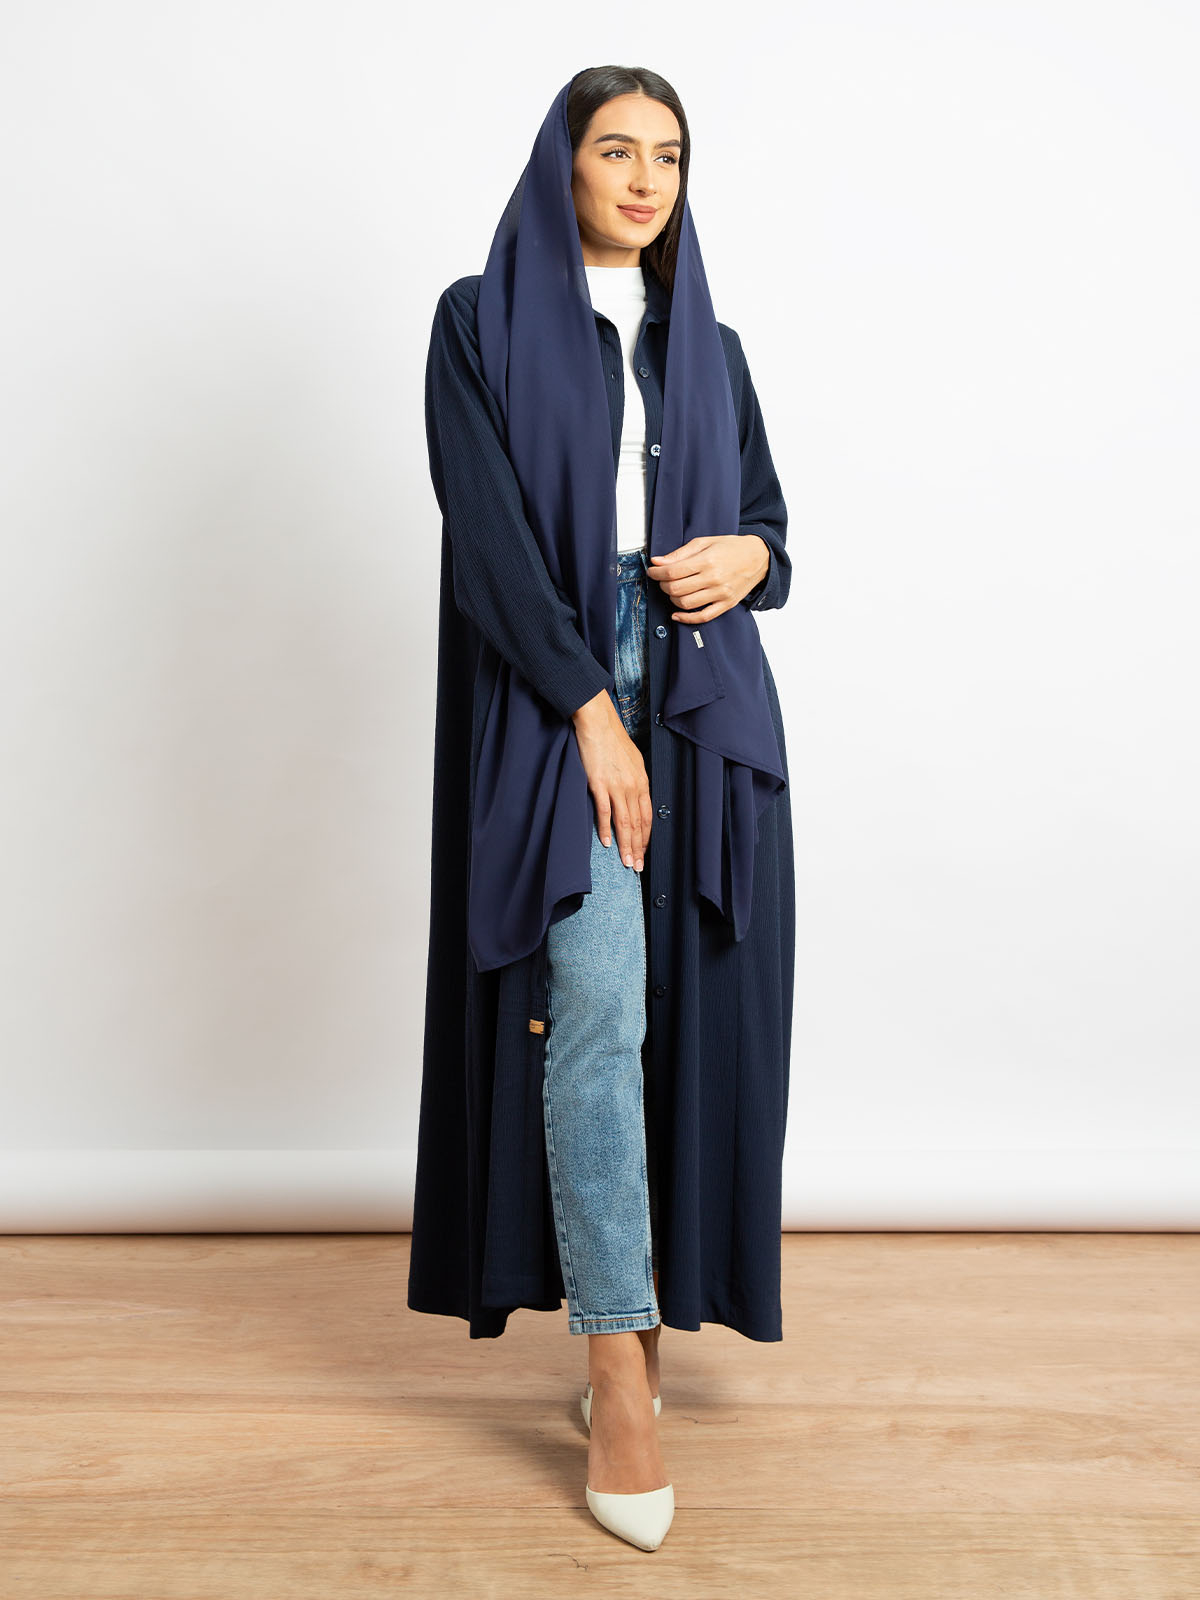 Kaafmeem women clothing regular fit navy color long shirt abaya in yoryu fabric with hidden pockets